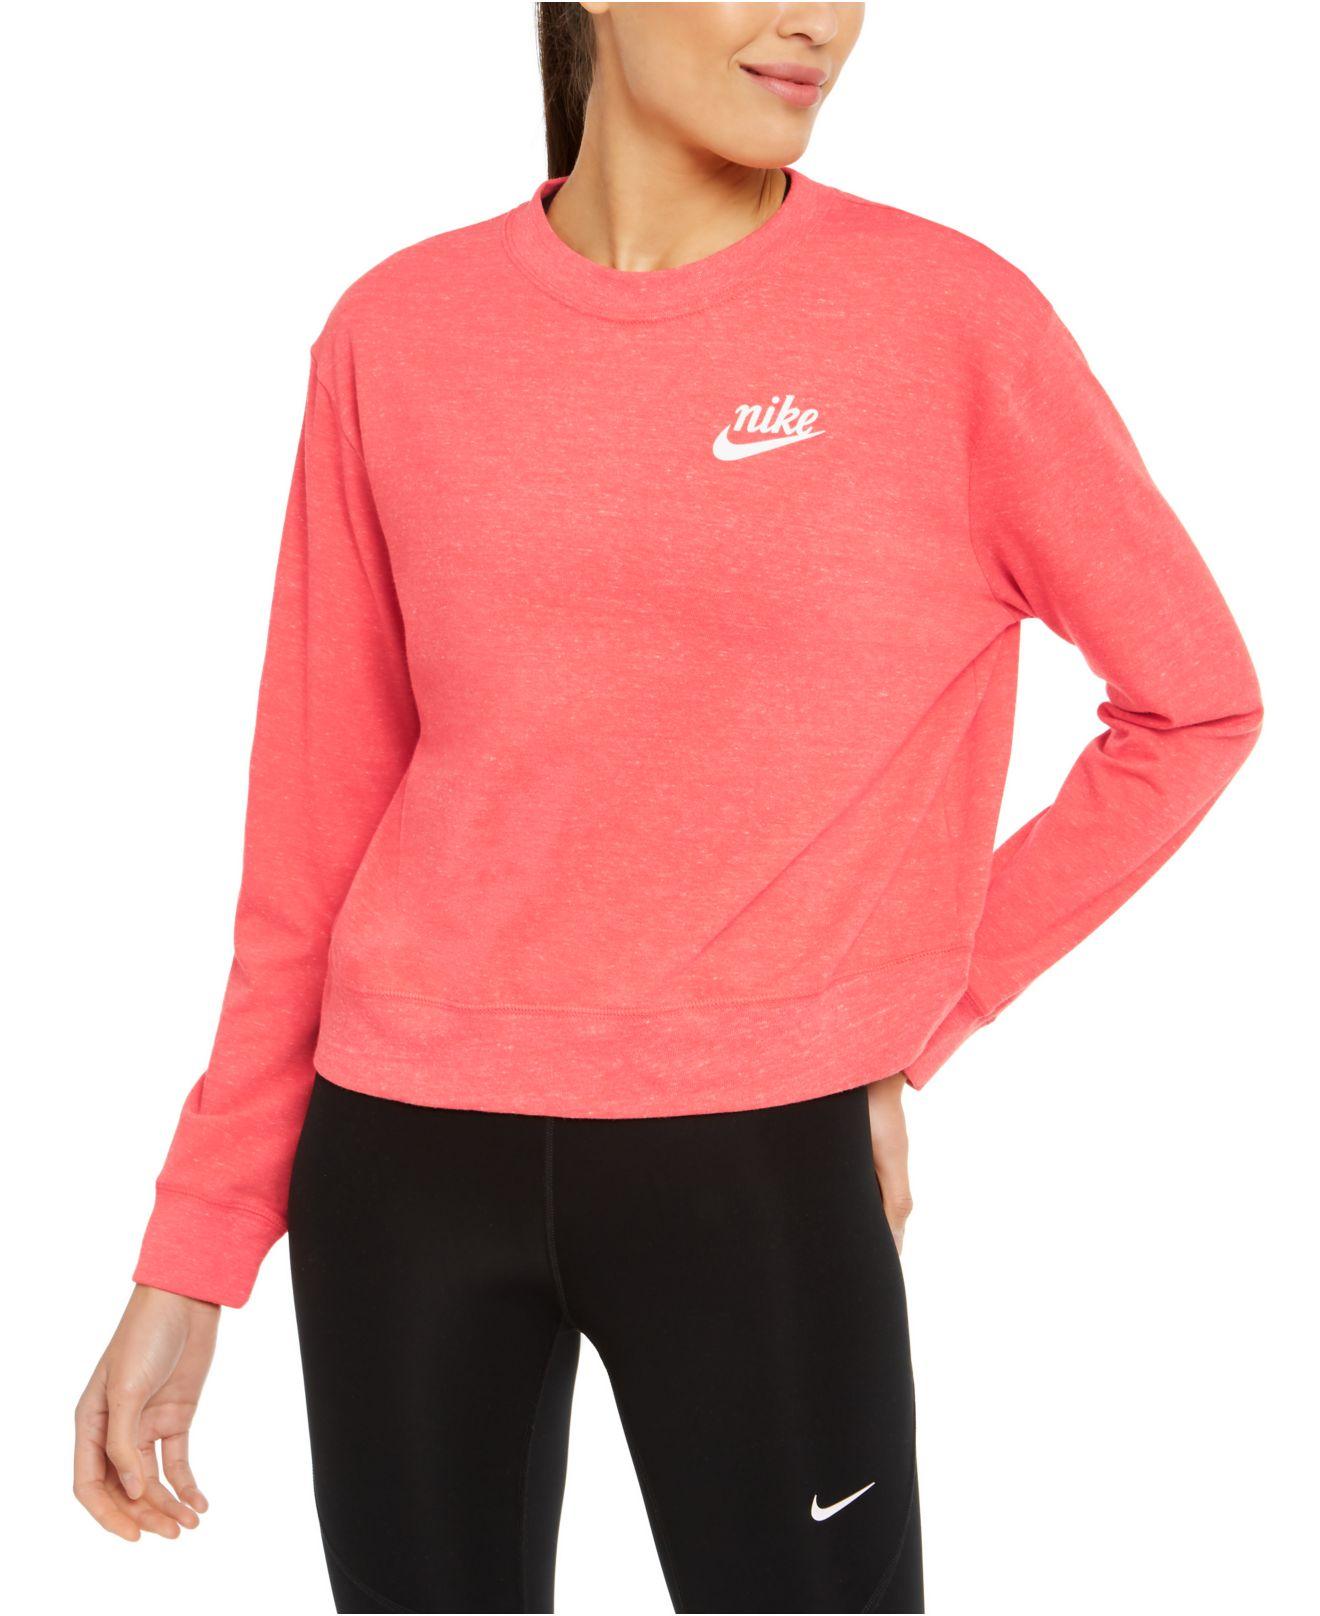 Nike Cotton Gym Vintage Sweatshirt - Lyst